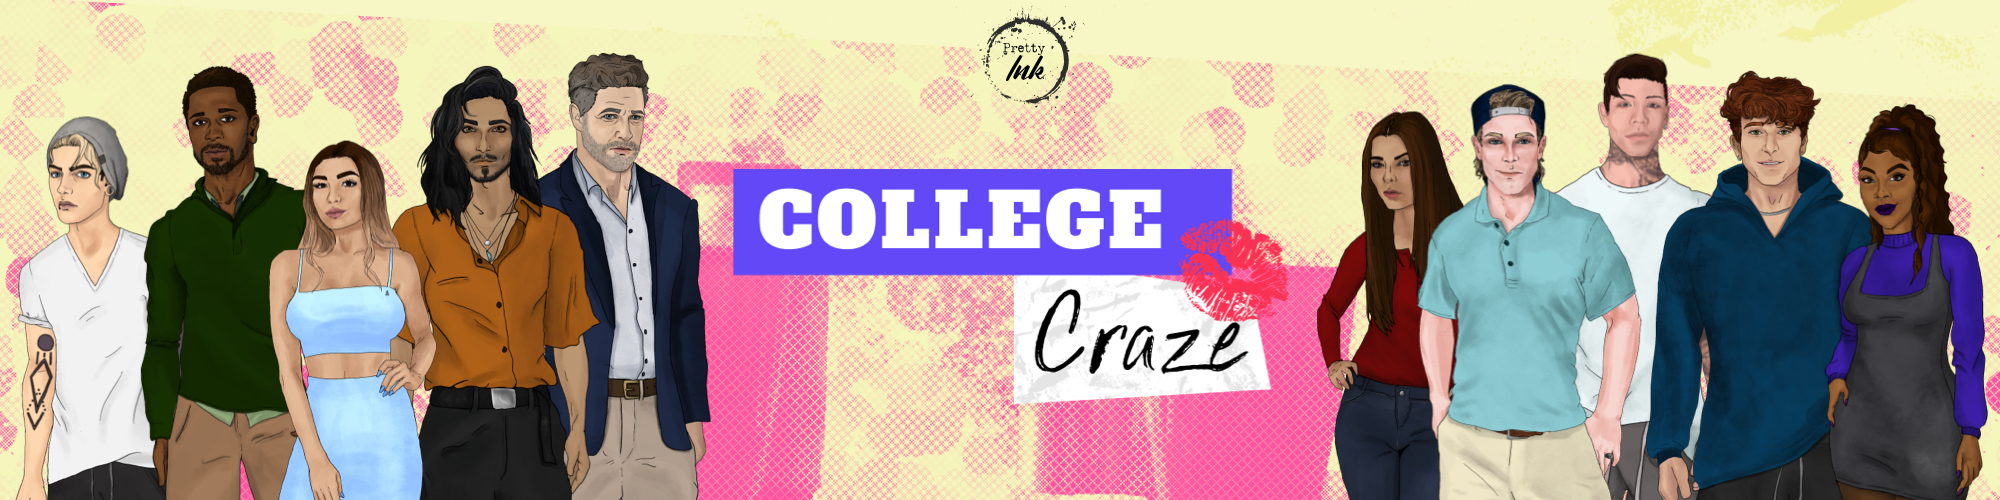 College Craze poster